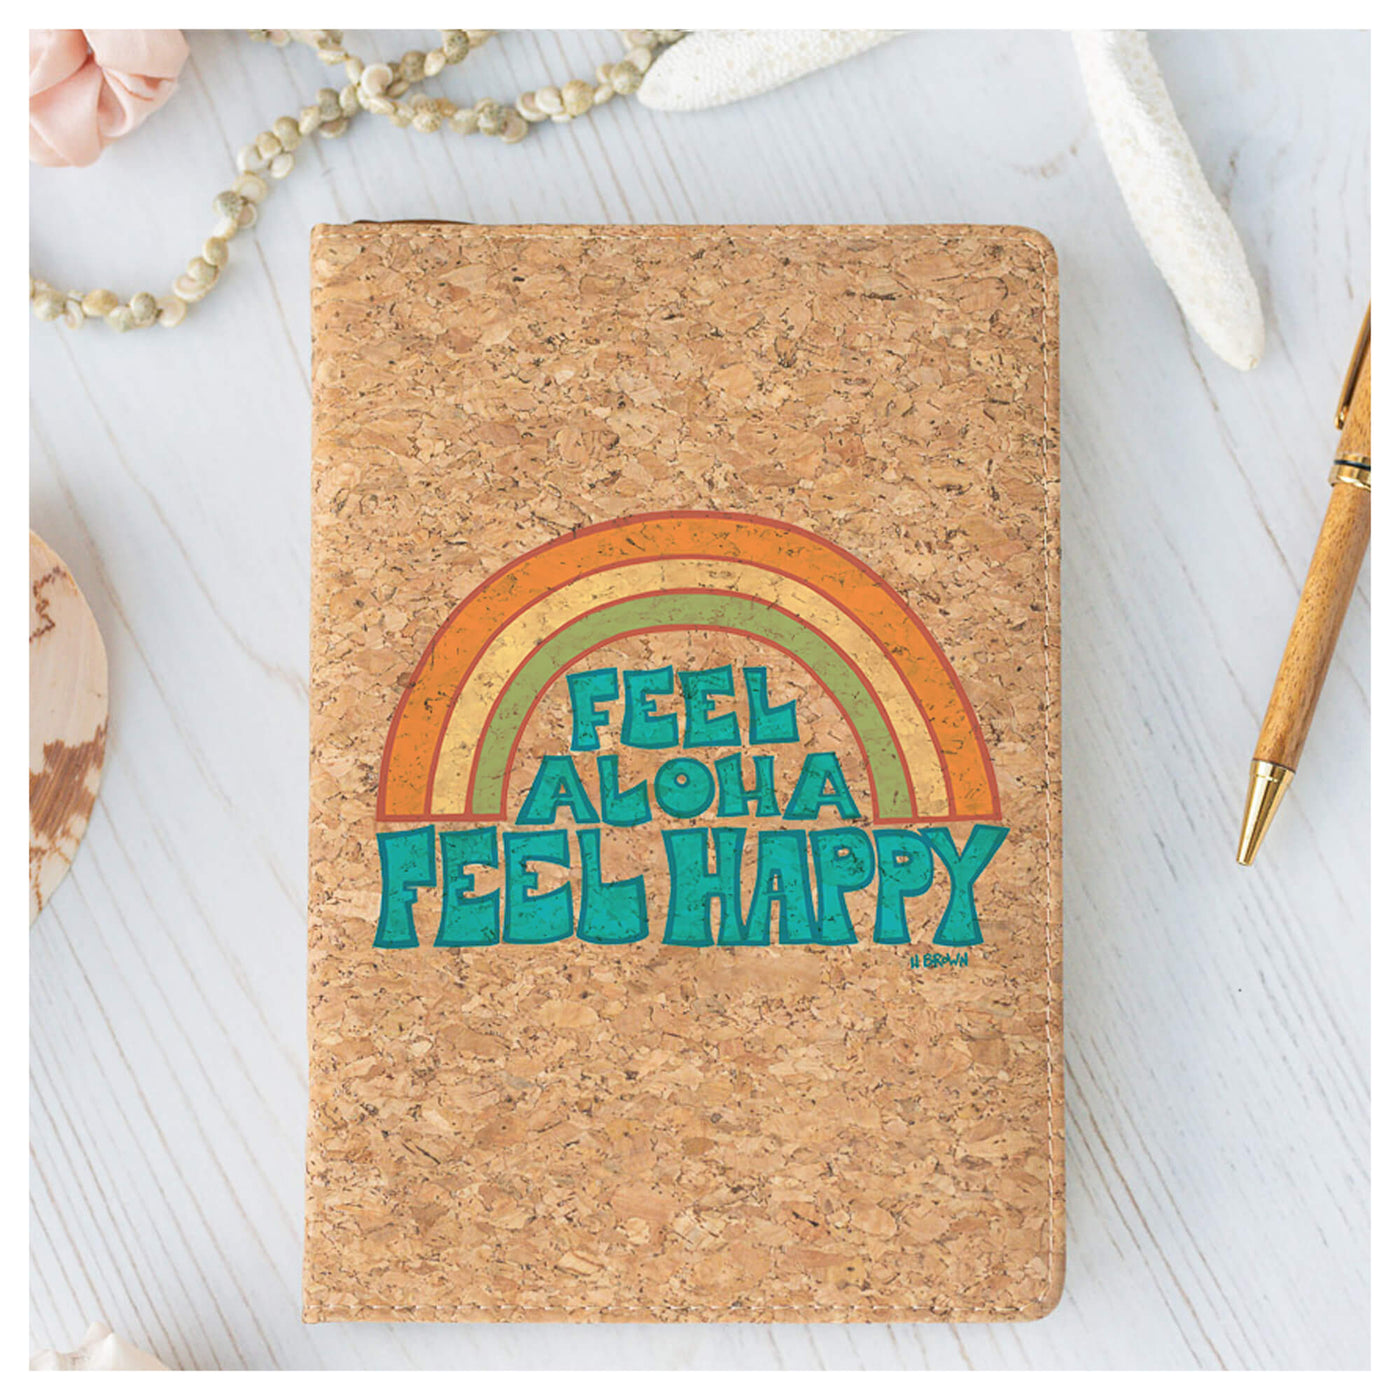 Feel Aloha Feel Happy  cork journal by Hawaii surf artist Heather Brown